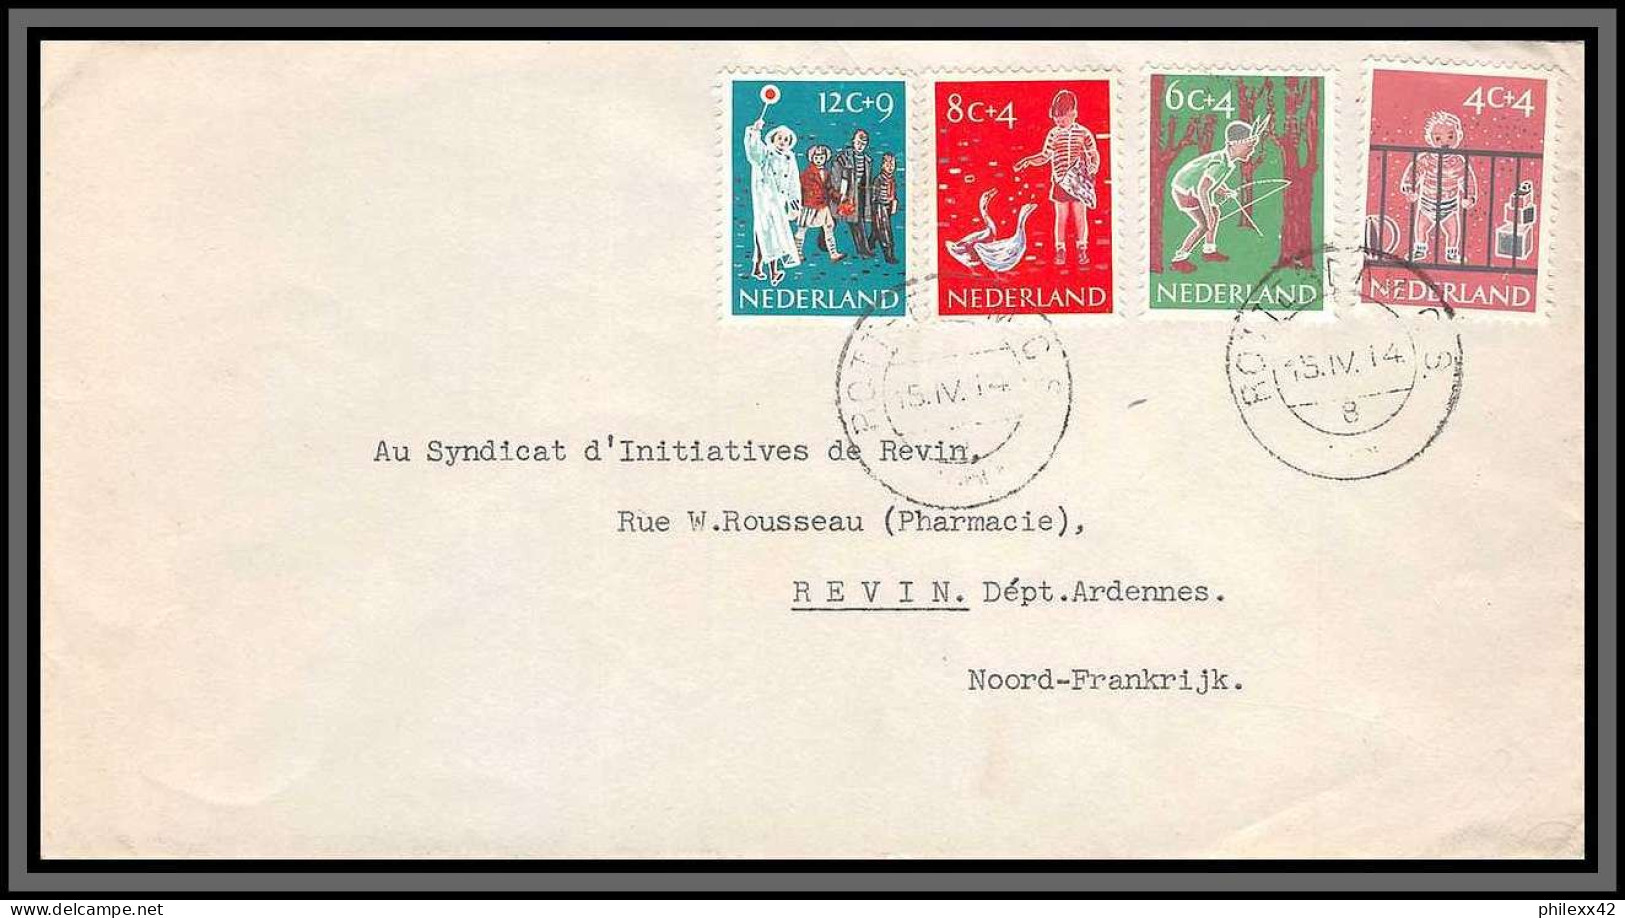 11355 1959 Kind. Keurig Getypt Adres Rotterdam Pour Revin Ardennes Lettre Cover Pays Bas Nederland  - Poststempel